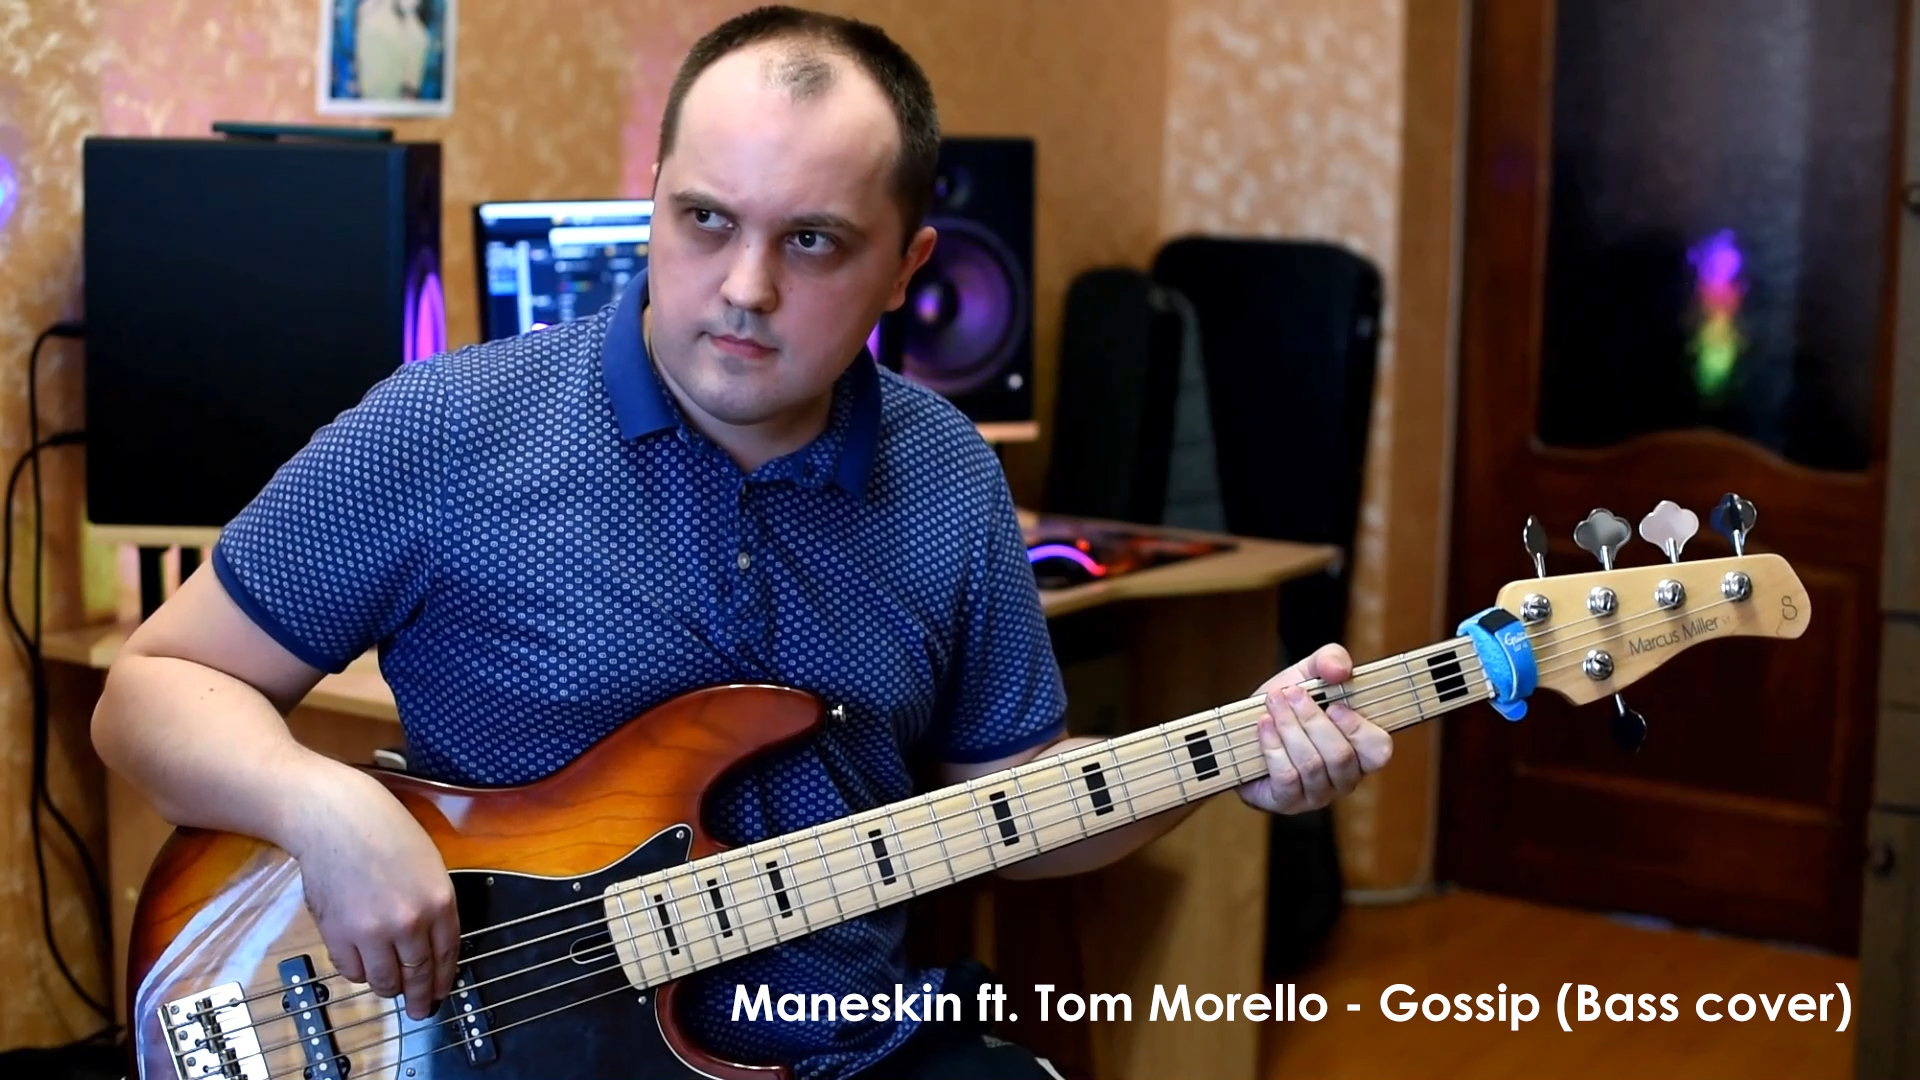 Gossip maneskin tom morello. Tom Morello Gossip. Maneskin ft. Tom Morello. Gossip (feat. Tom Morello).